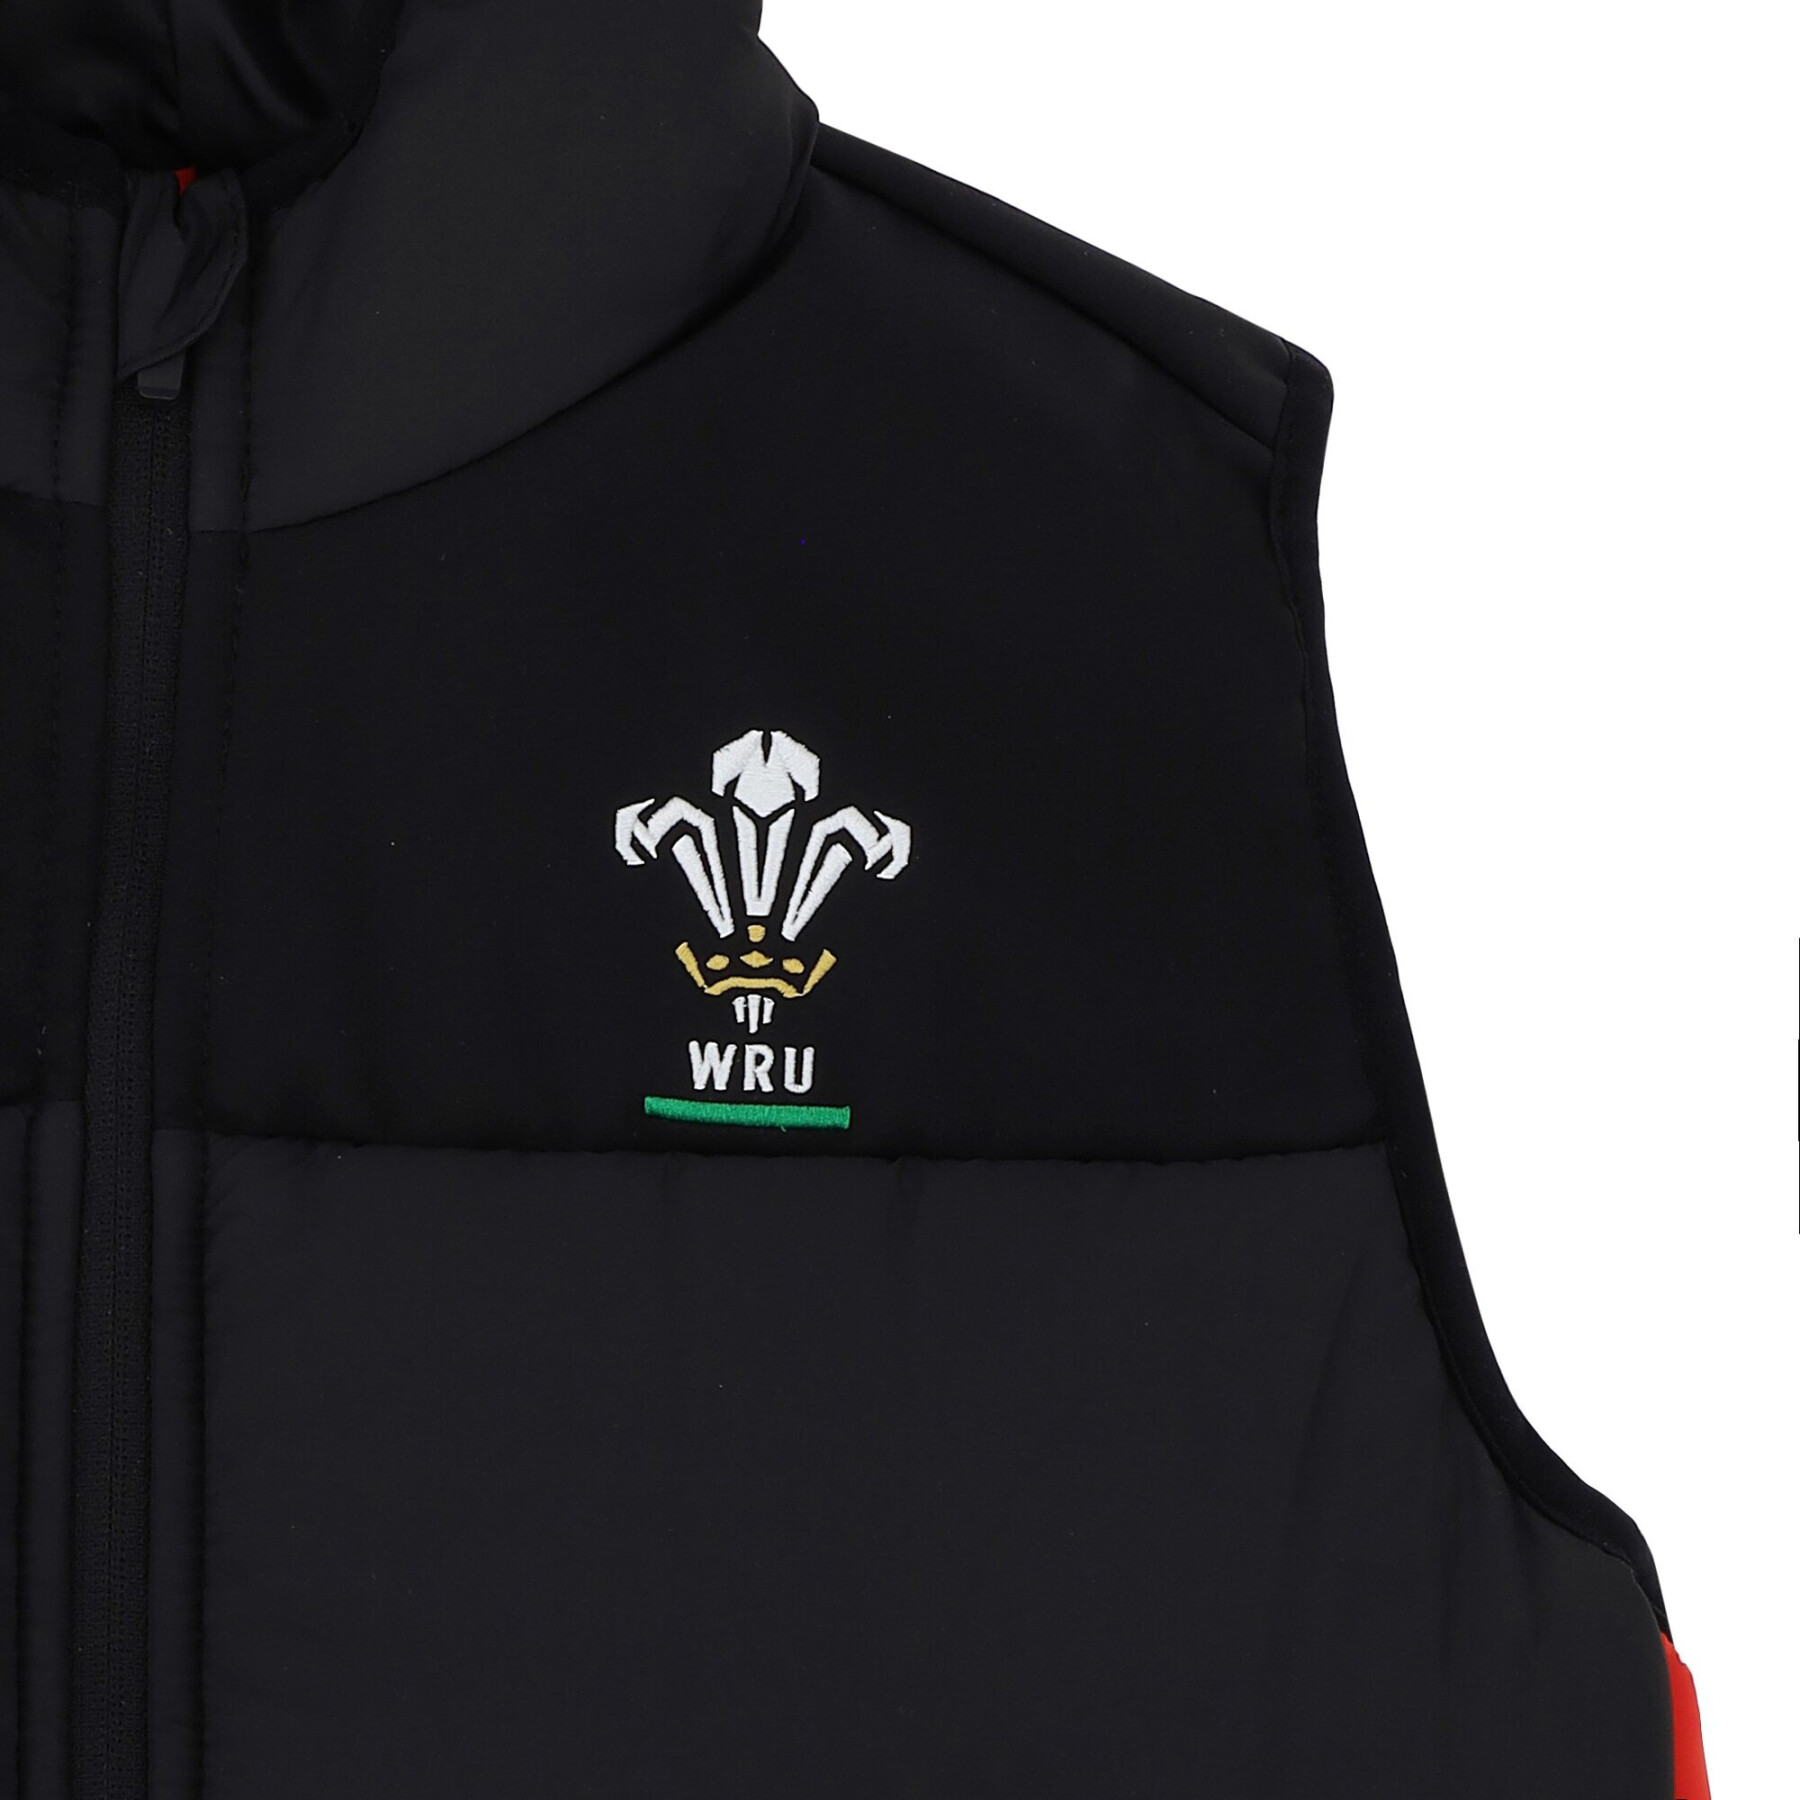 Children's jacket Pays de Galles Rugby XV 2020/21